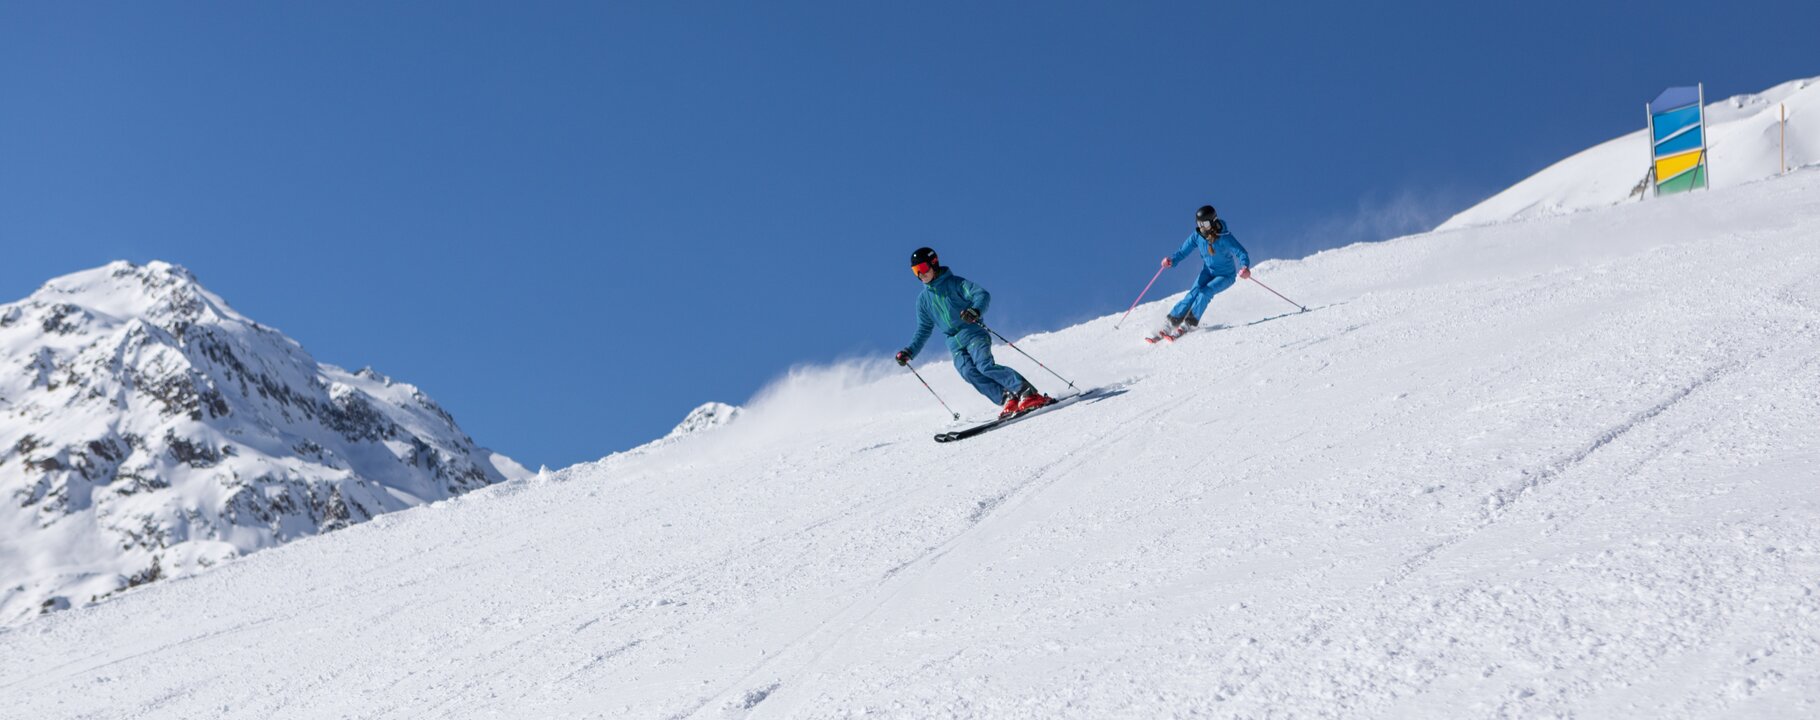 skiing holiday in Serfaus-Fiss-Ladis in Tyrol | © Serfaus-Fiss-Ladis Marketing GmbH | Andreas Kirschner